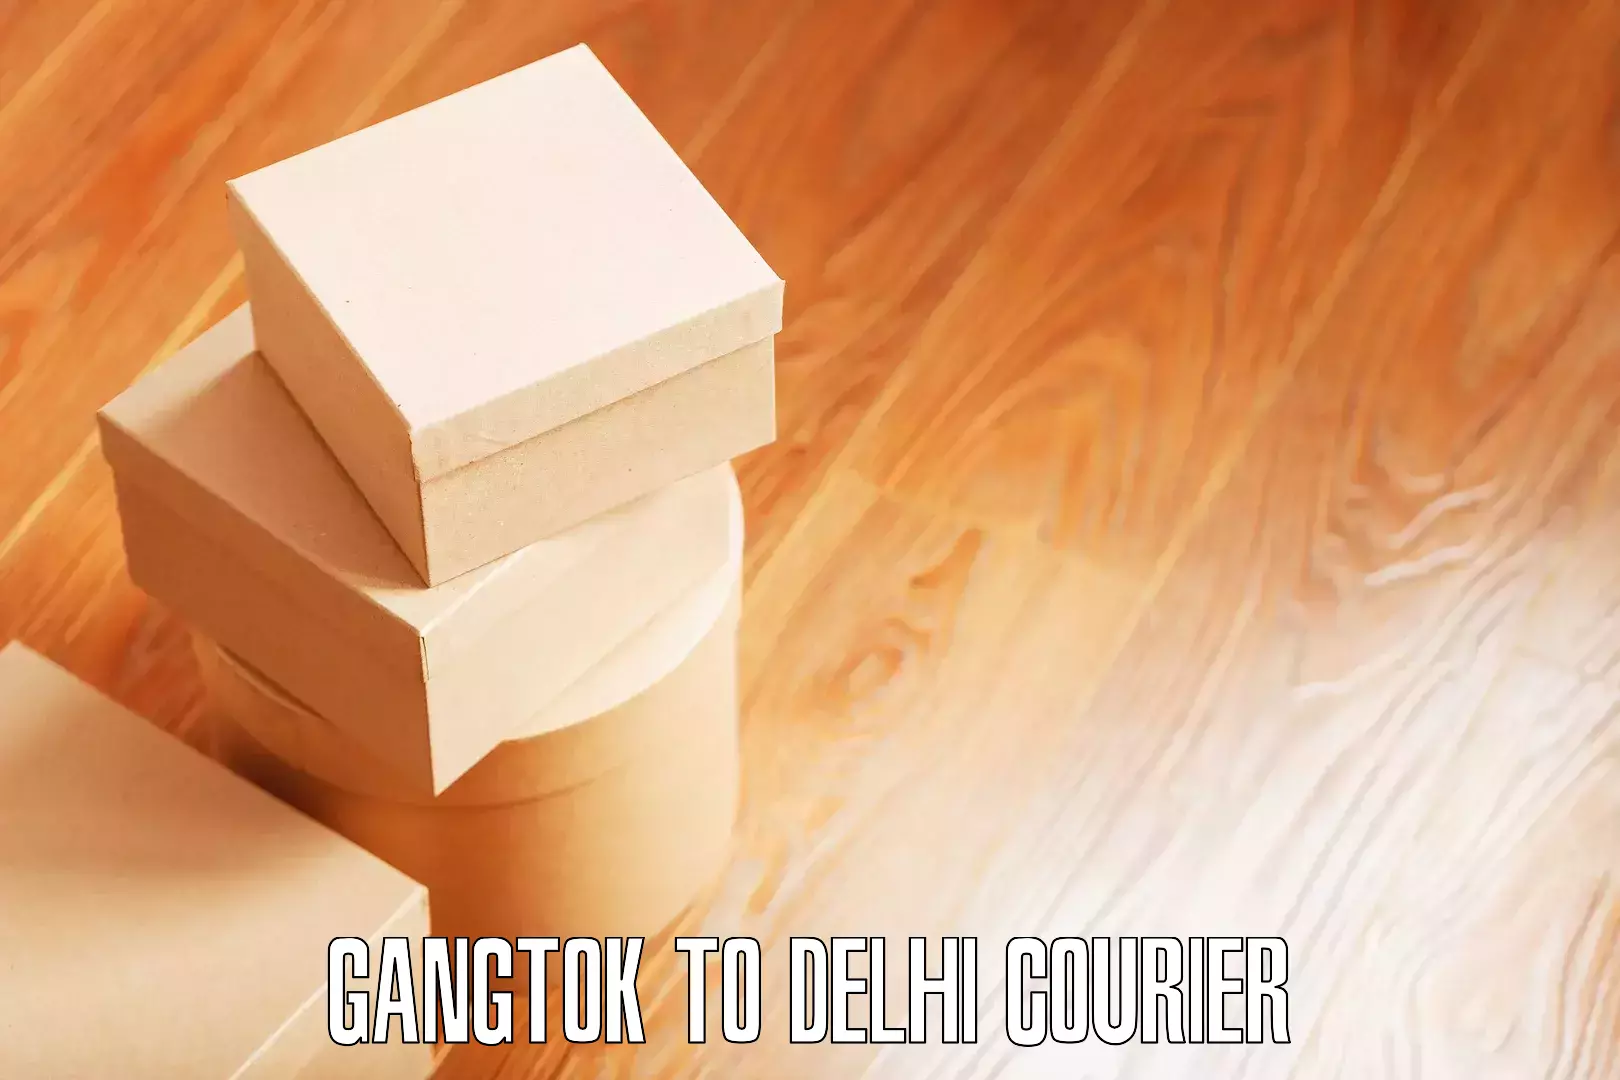 Moving and packing experts Gangtok to Krishna Nagar